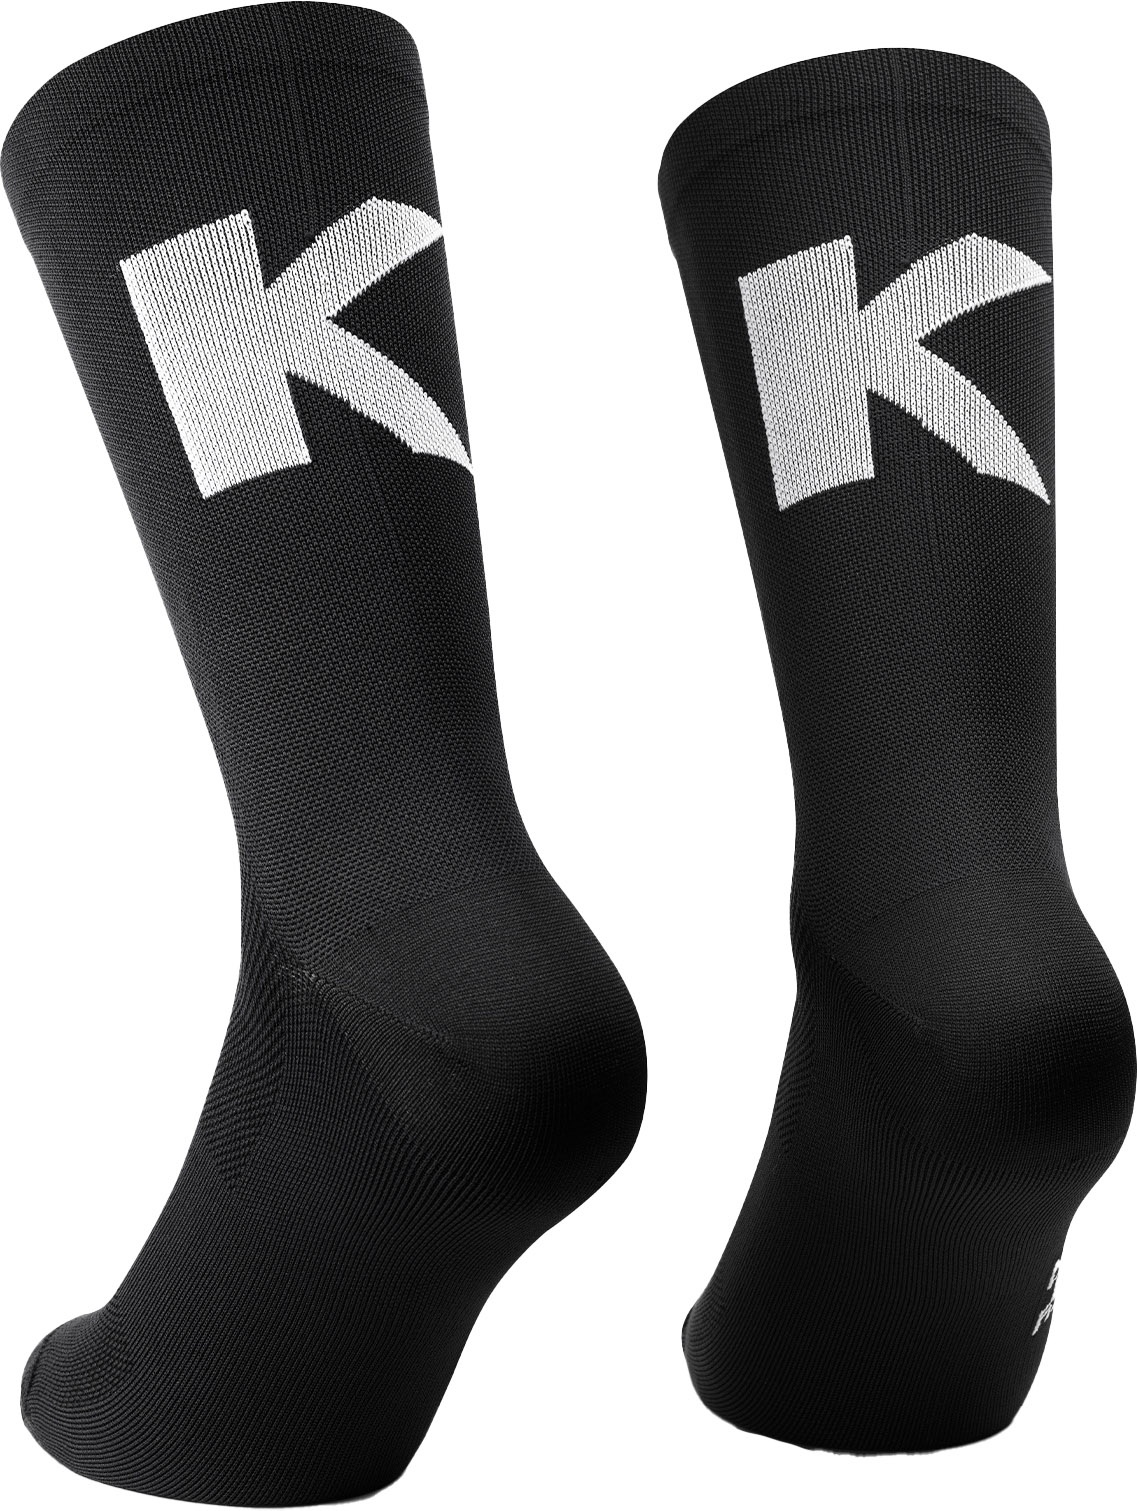 Se Assos Ego Socks K - Black Series hos Cykelexperten.dk